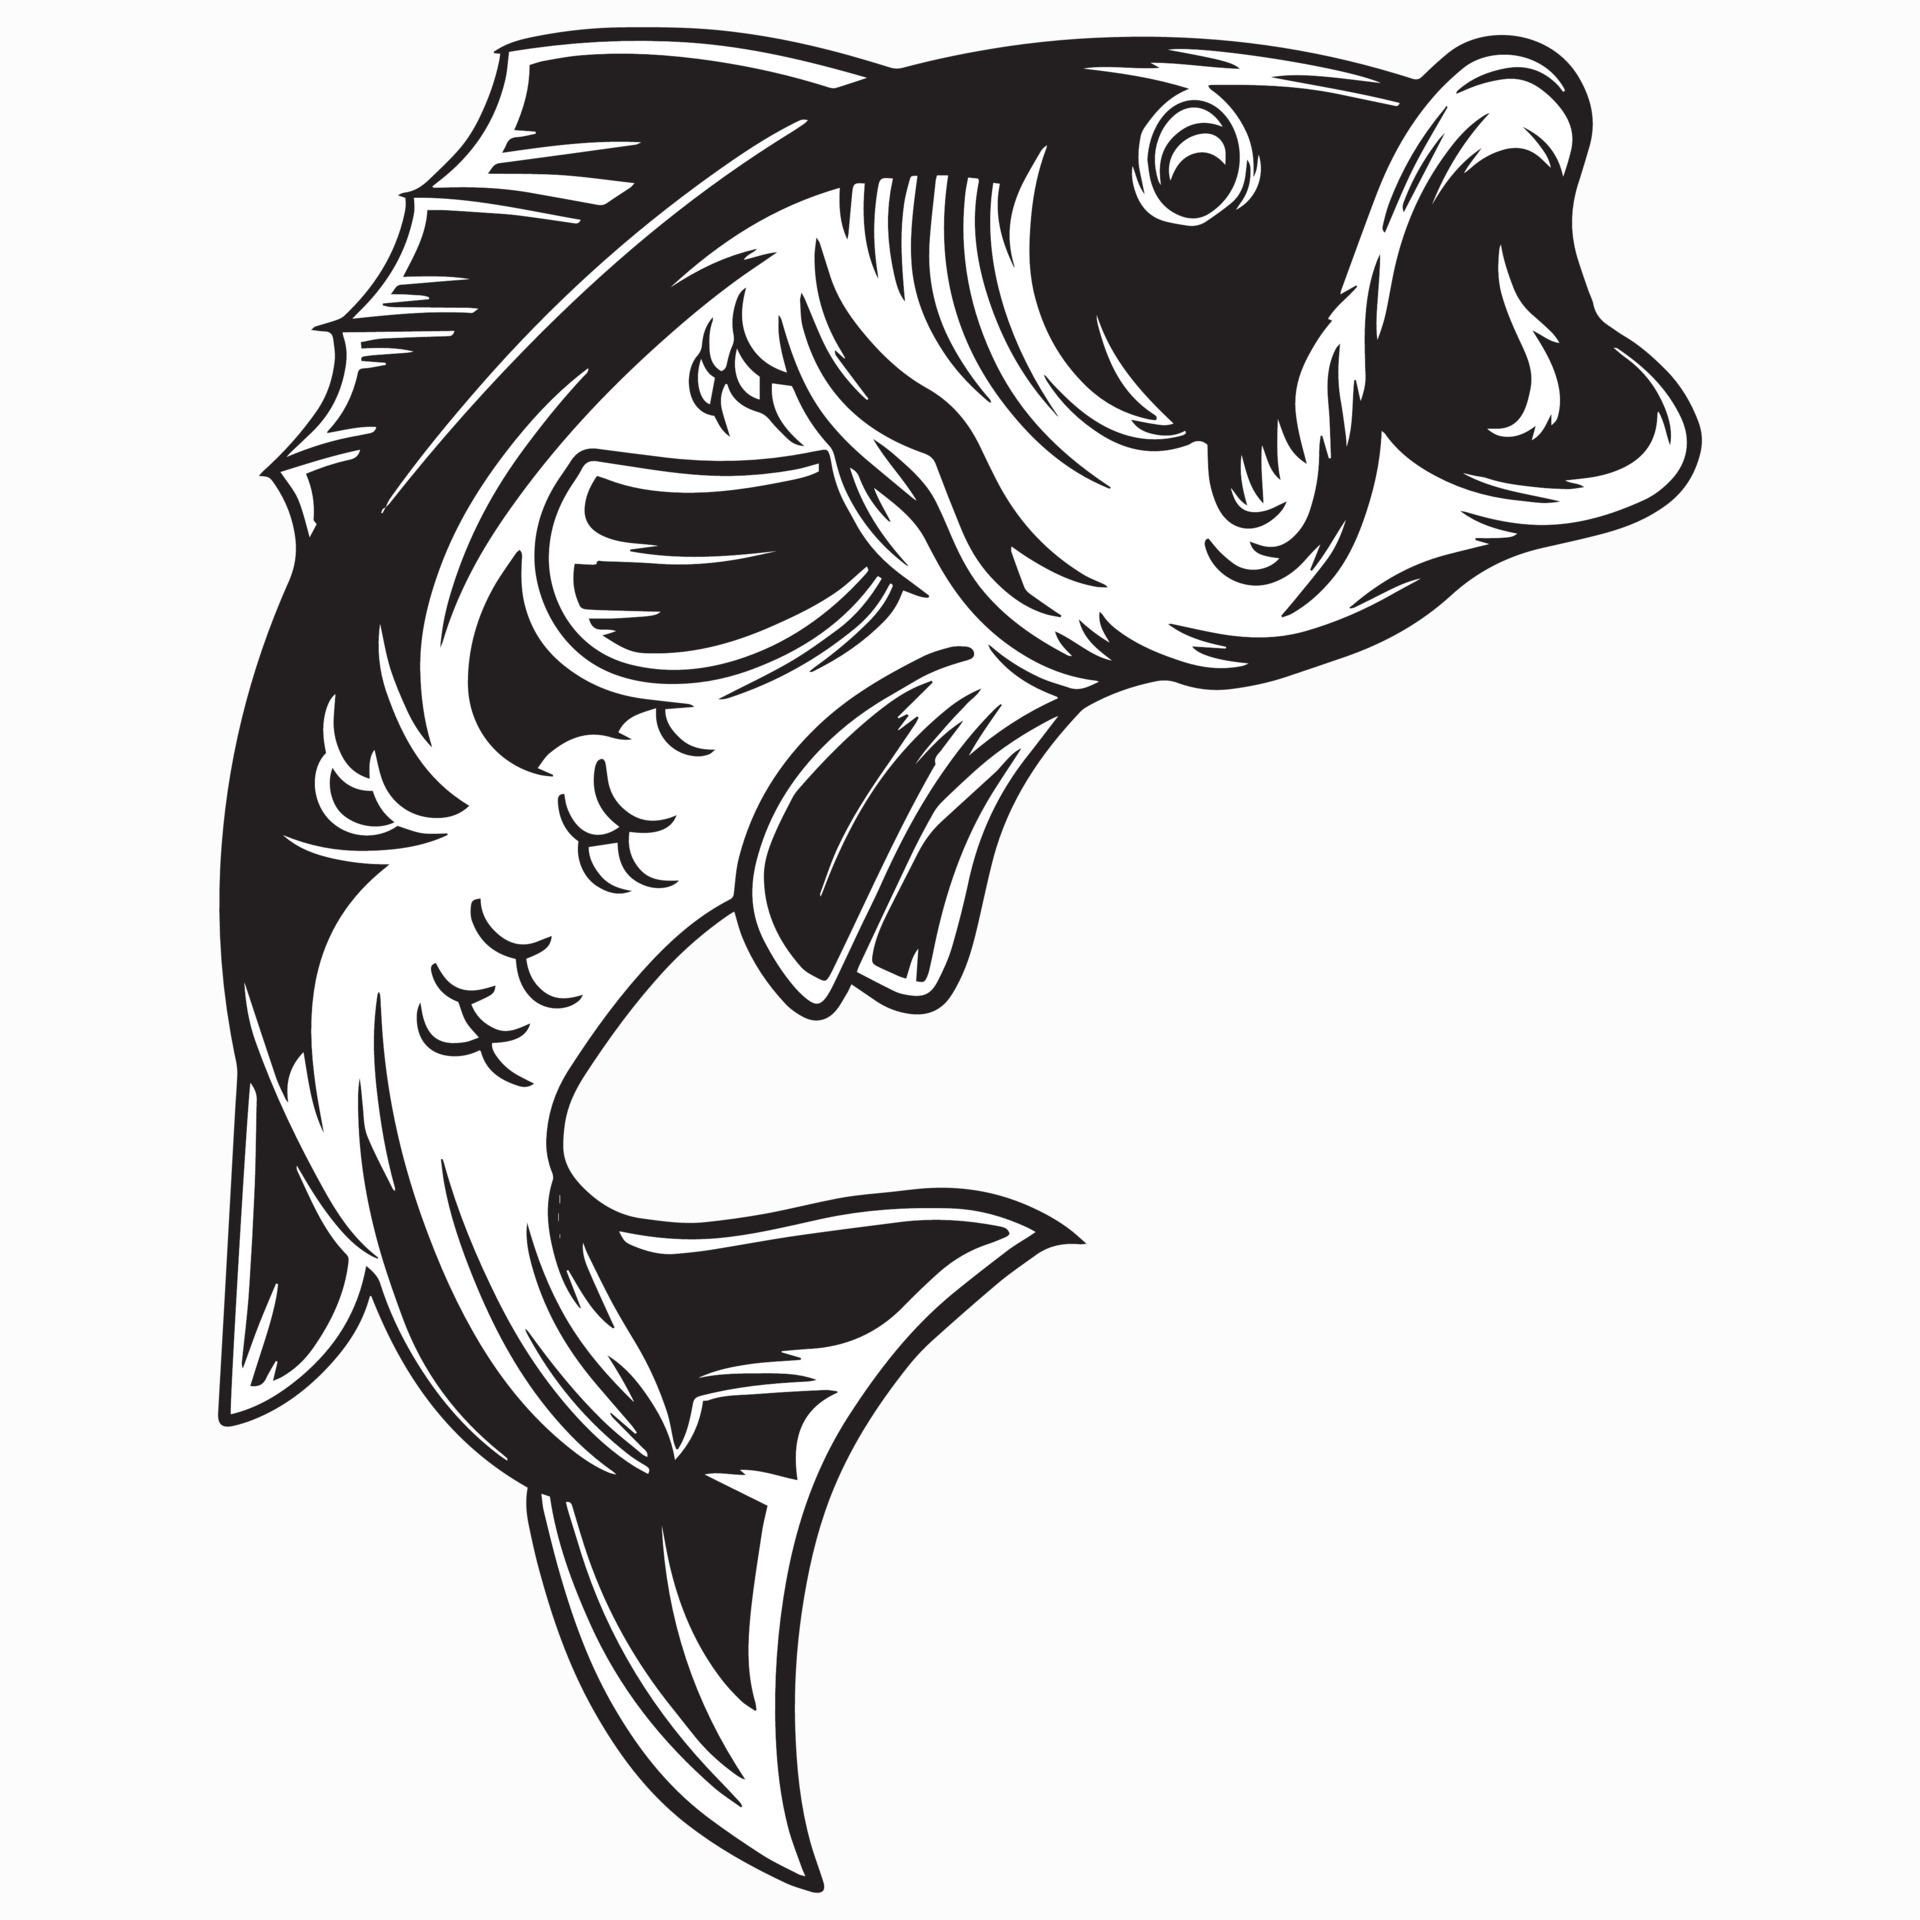 leap jumping bass fish clip art, fish logo black and white vector